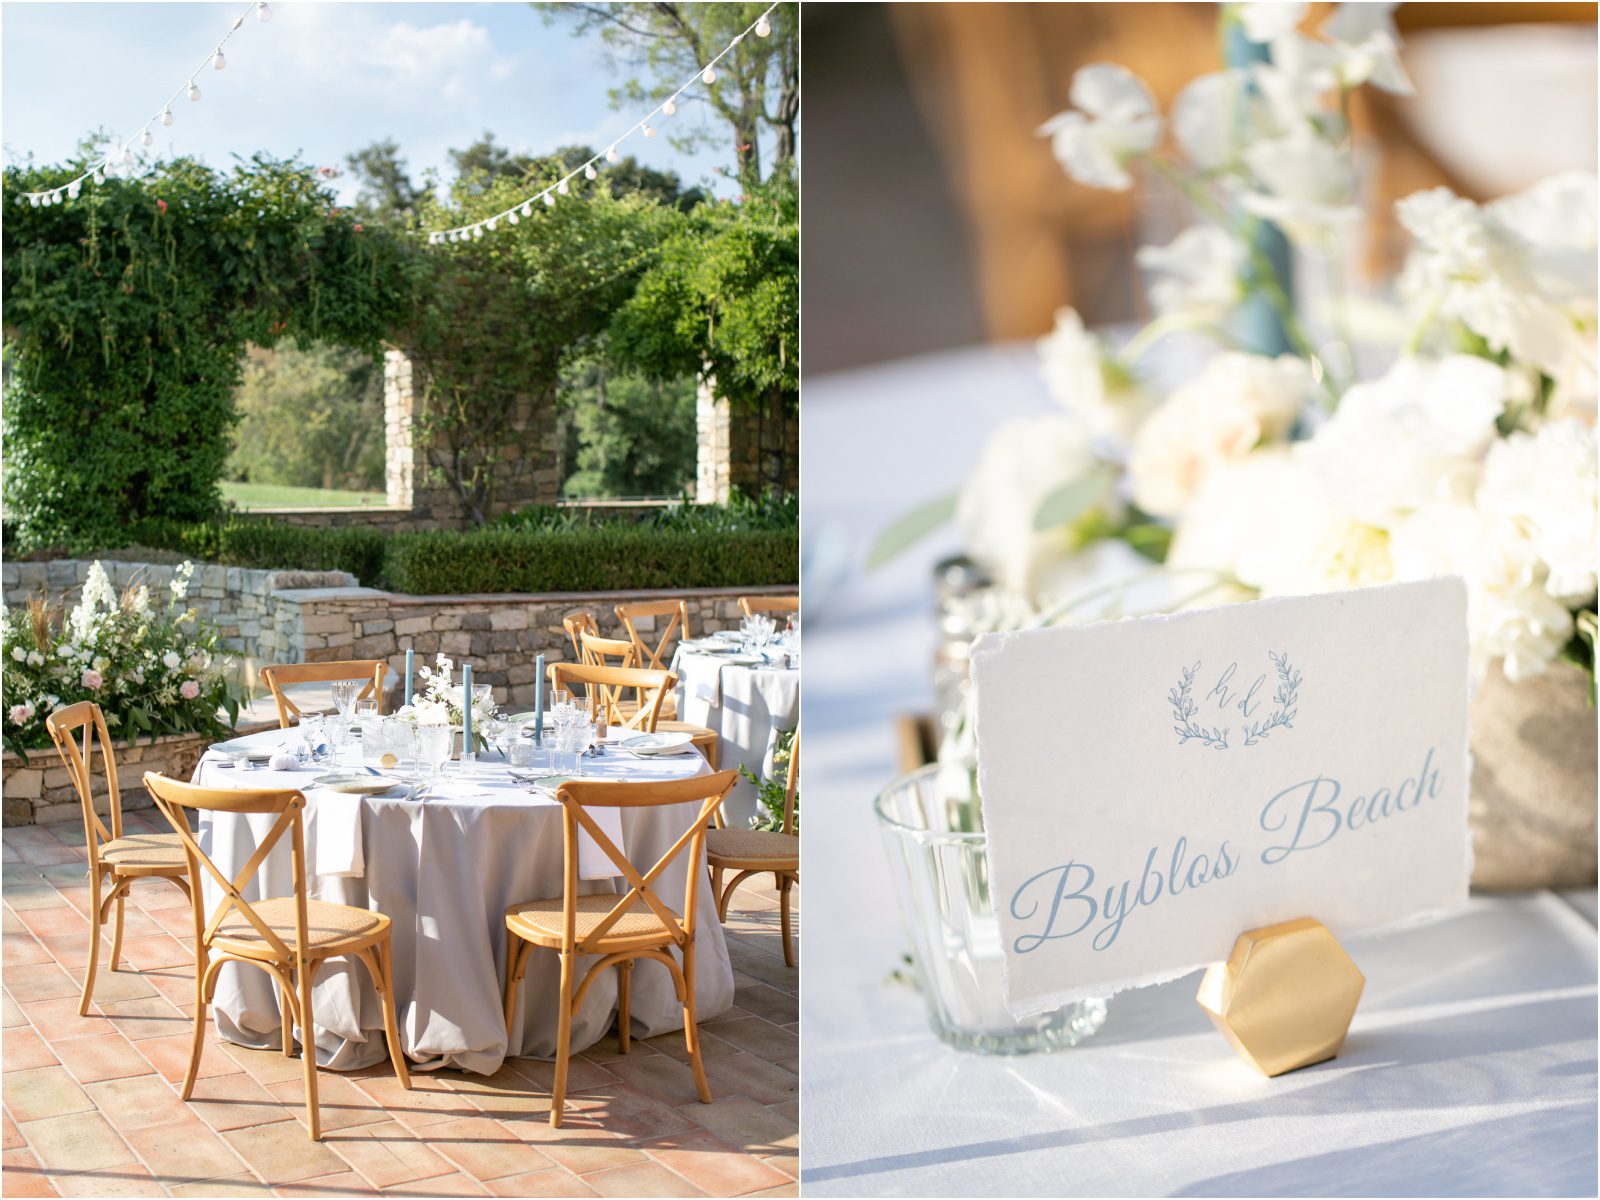 Byblos Beach Saint-Tropez wedding table names